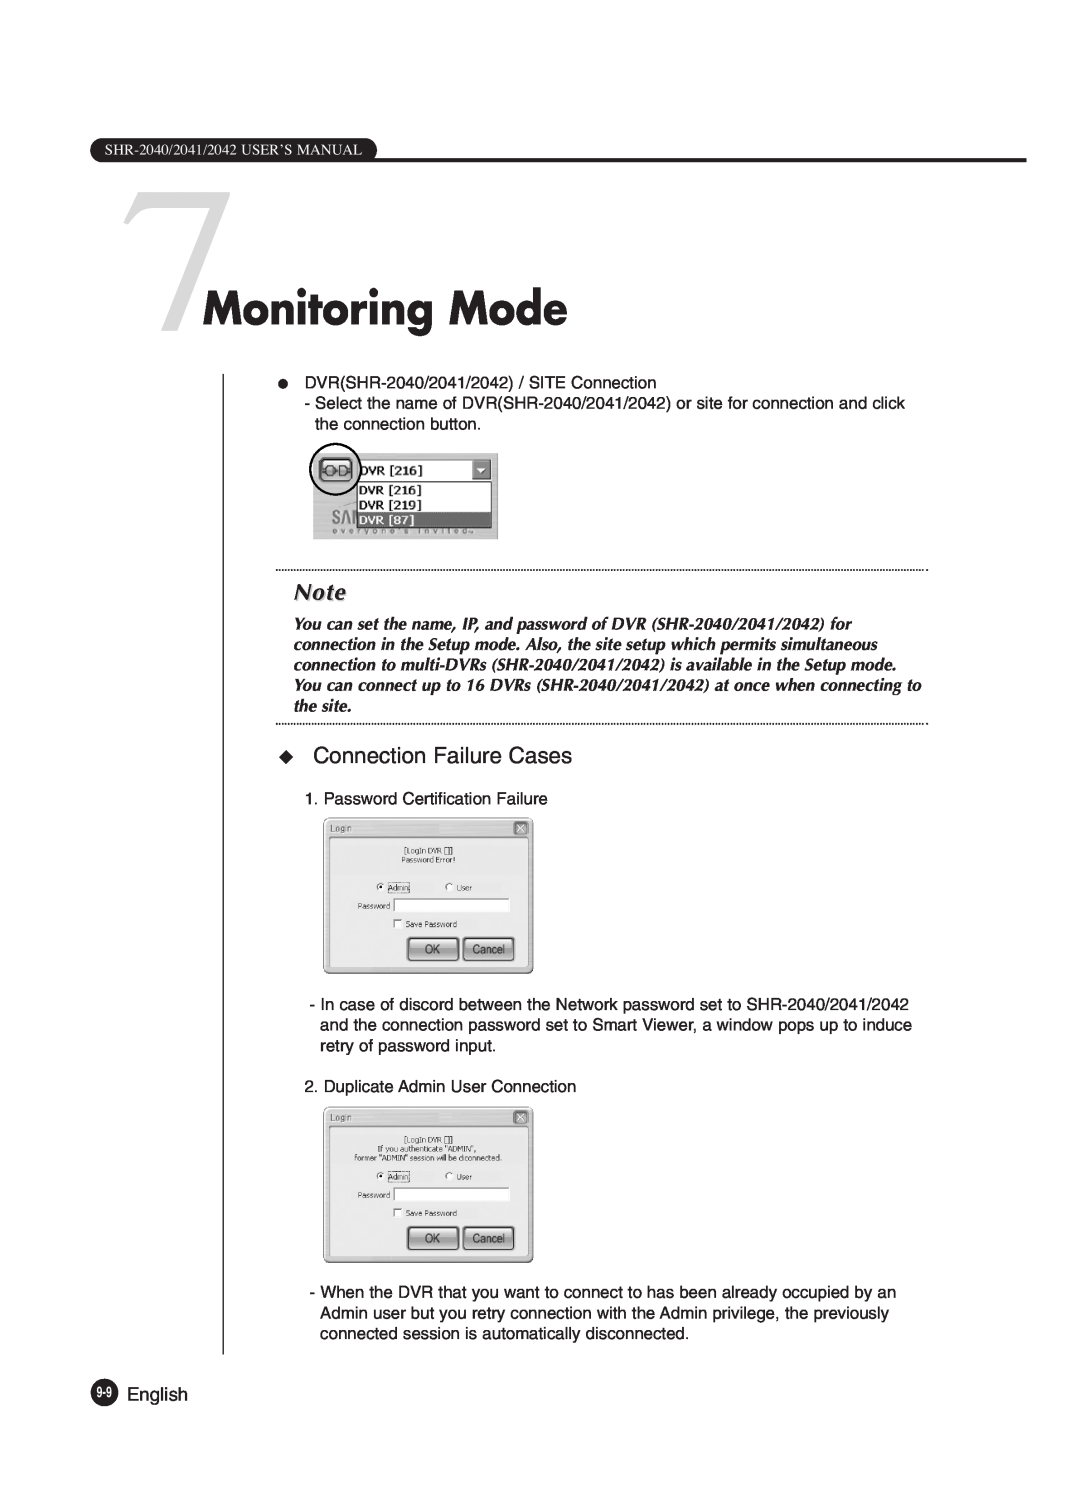 Samsung SHR-2042P250, SHR-2040P250 manual 7Monitoring Mode, Connection Failure Cases 